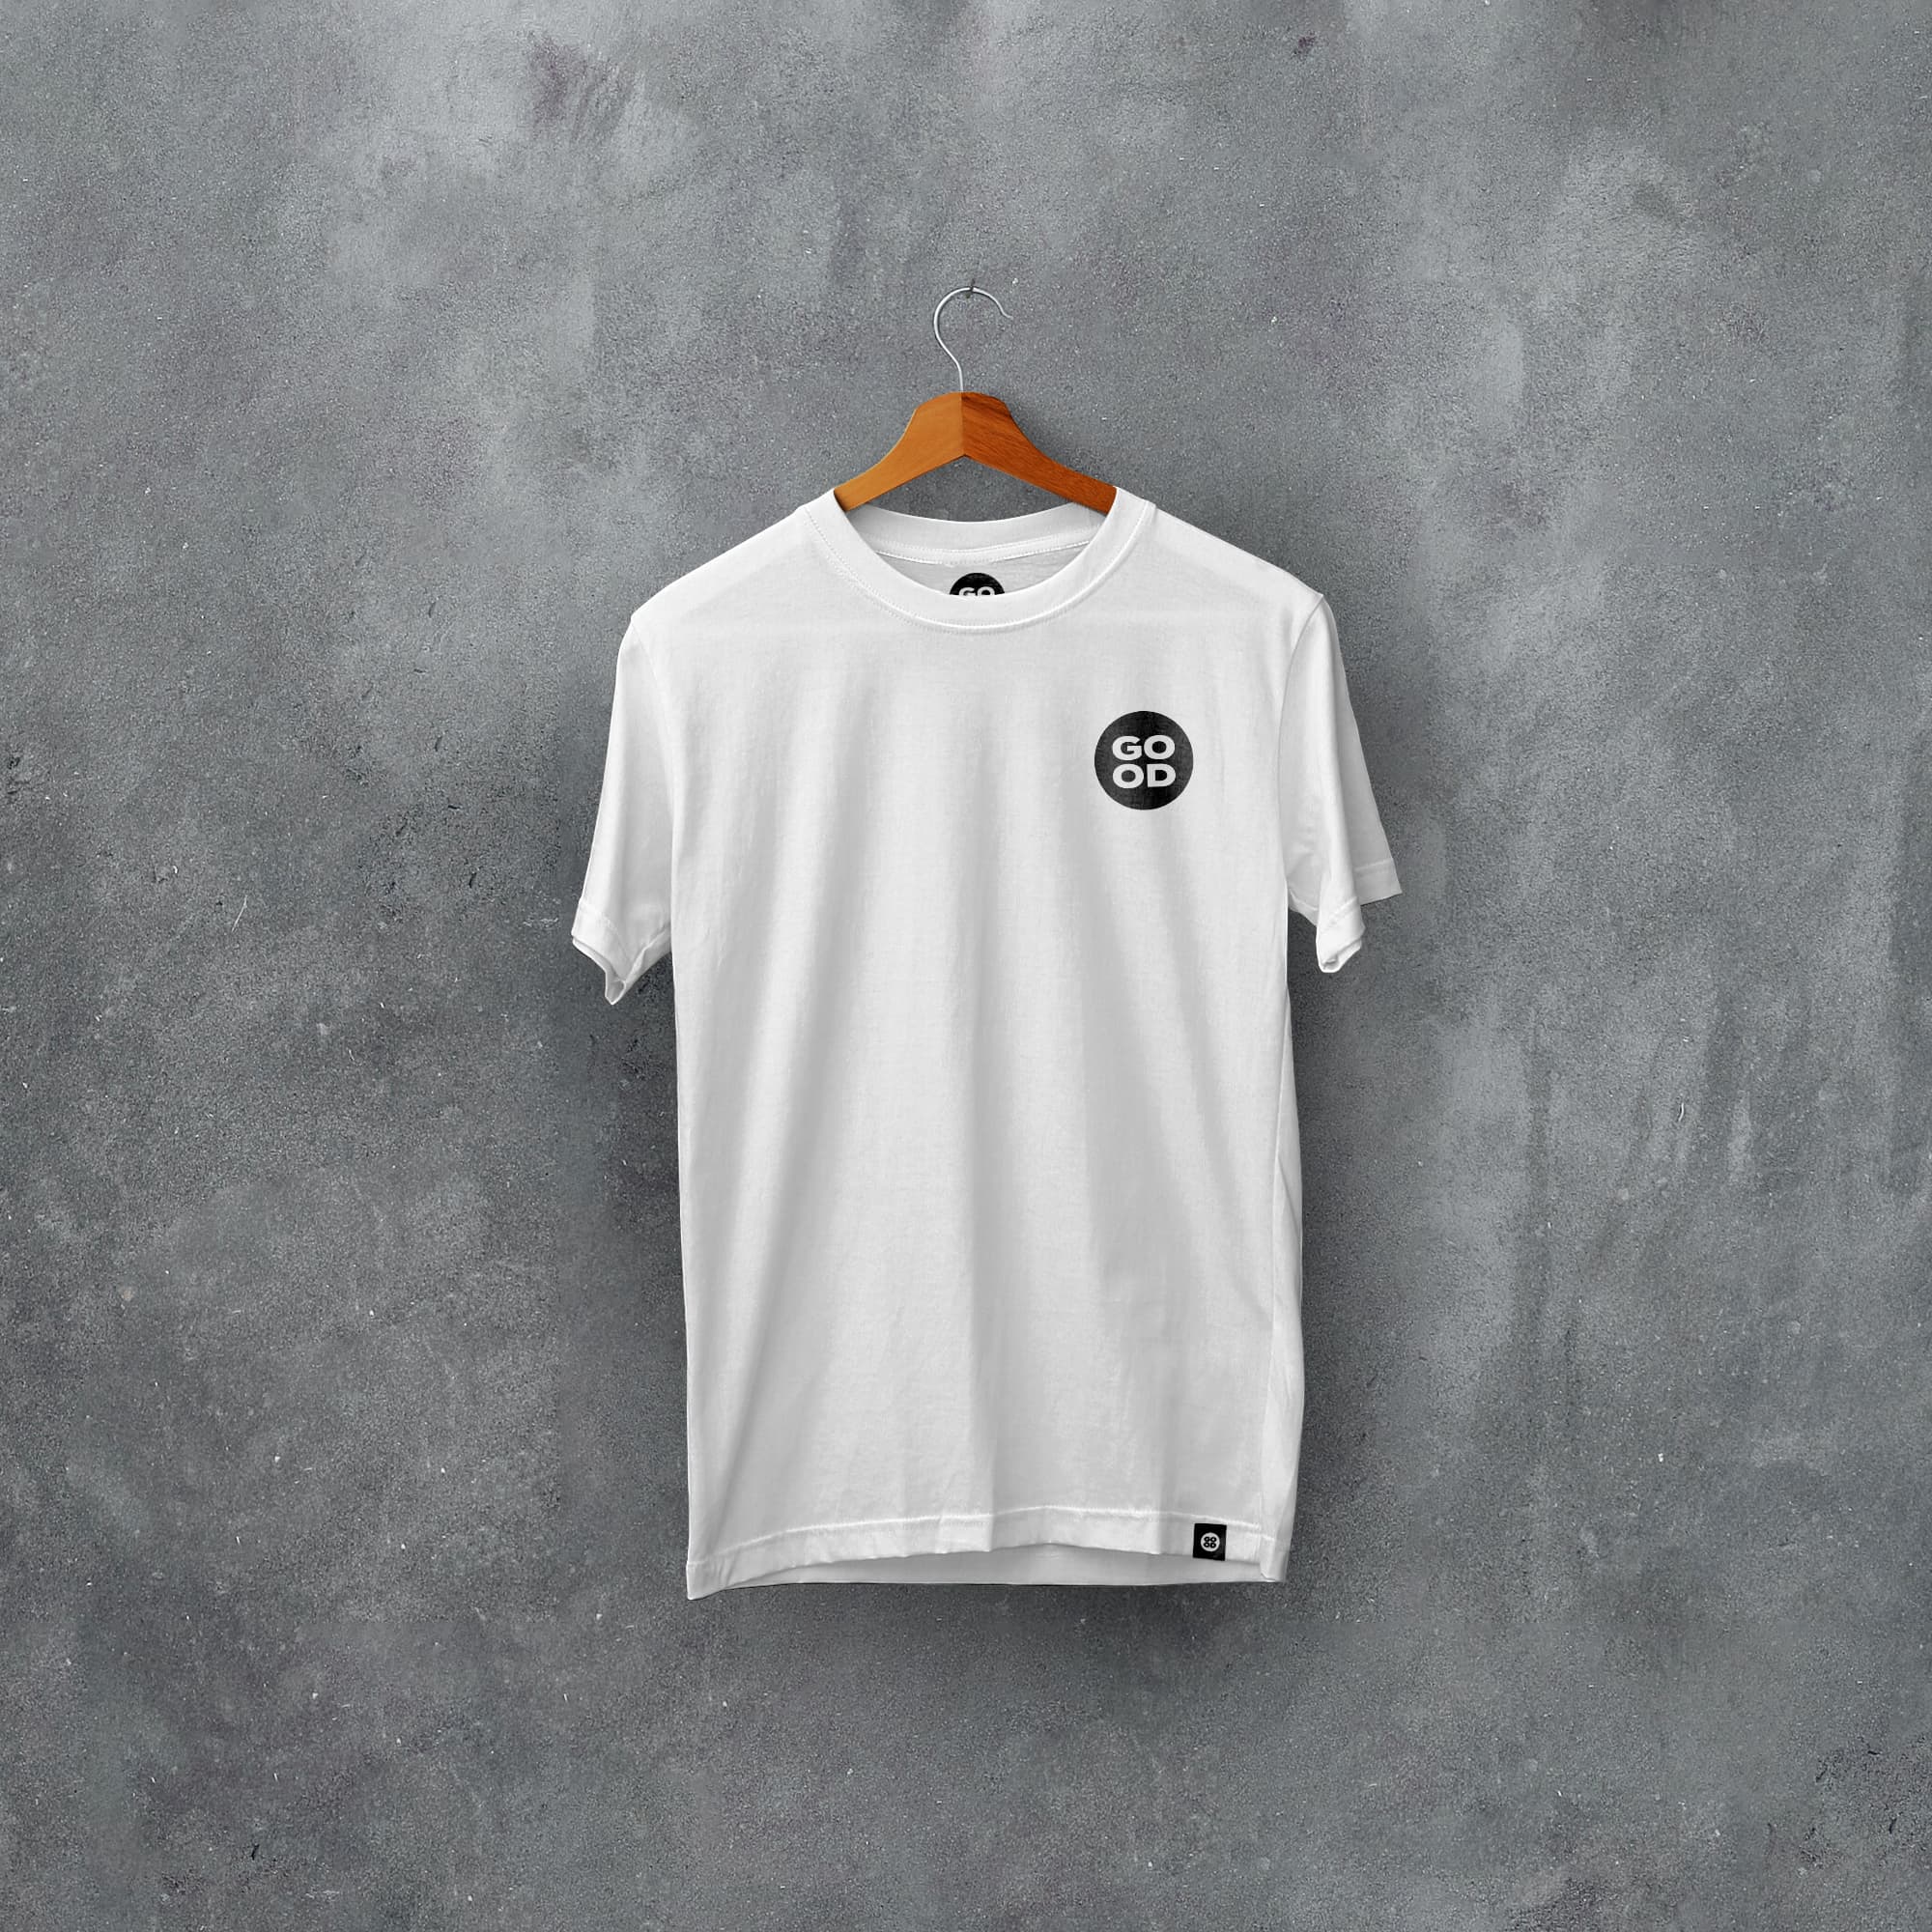 Portsmouth Classic Kits Football T-Shirt